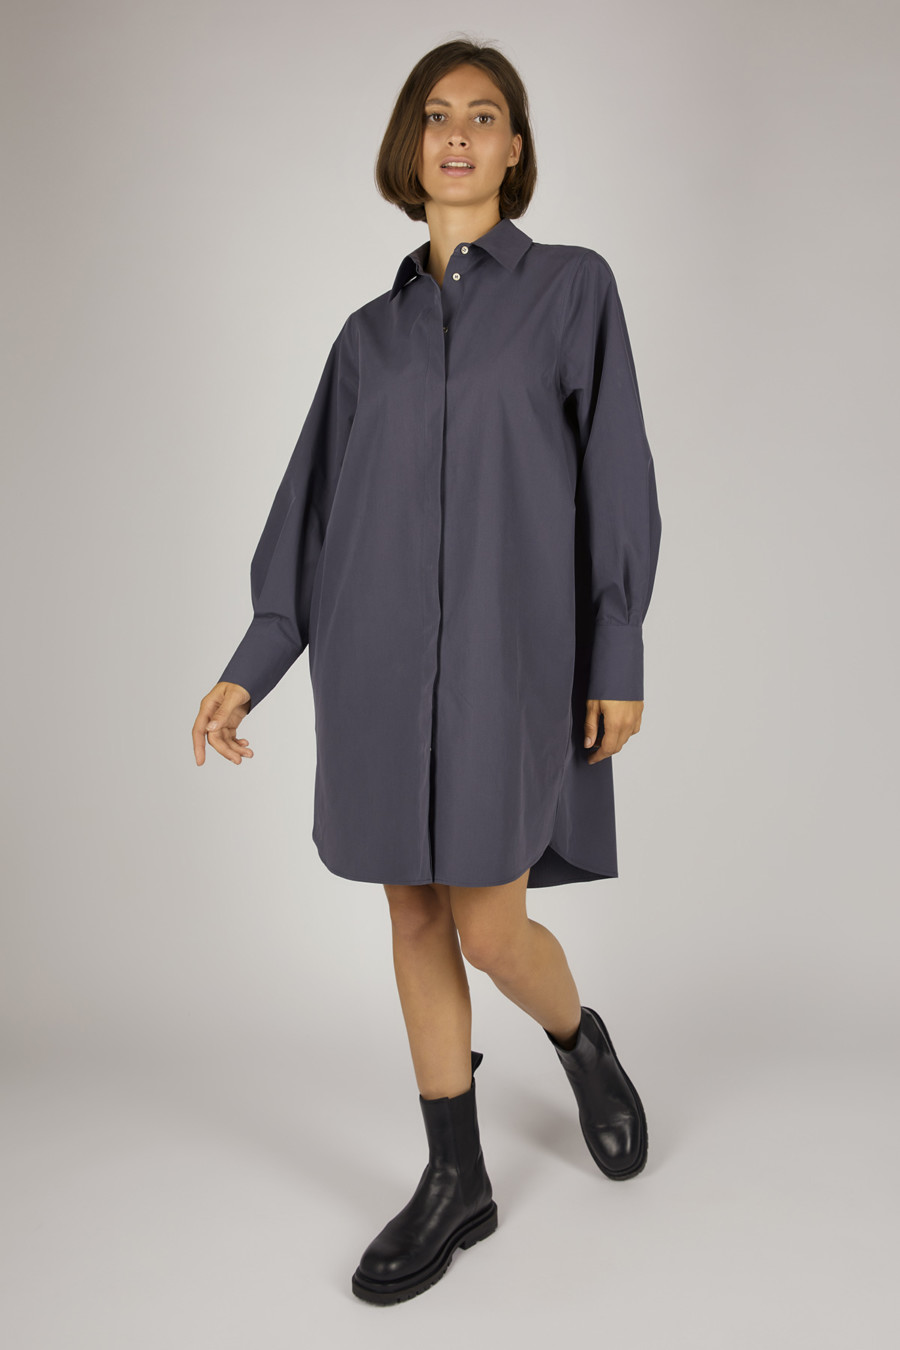 LORA DRESS – Oversize shirt blouse dress – Color: Slate